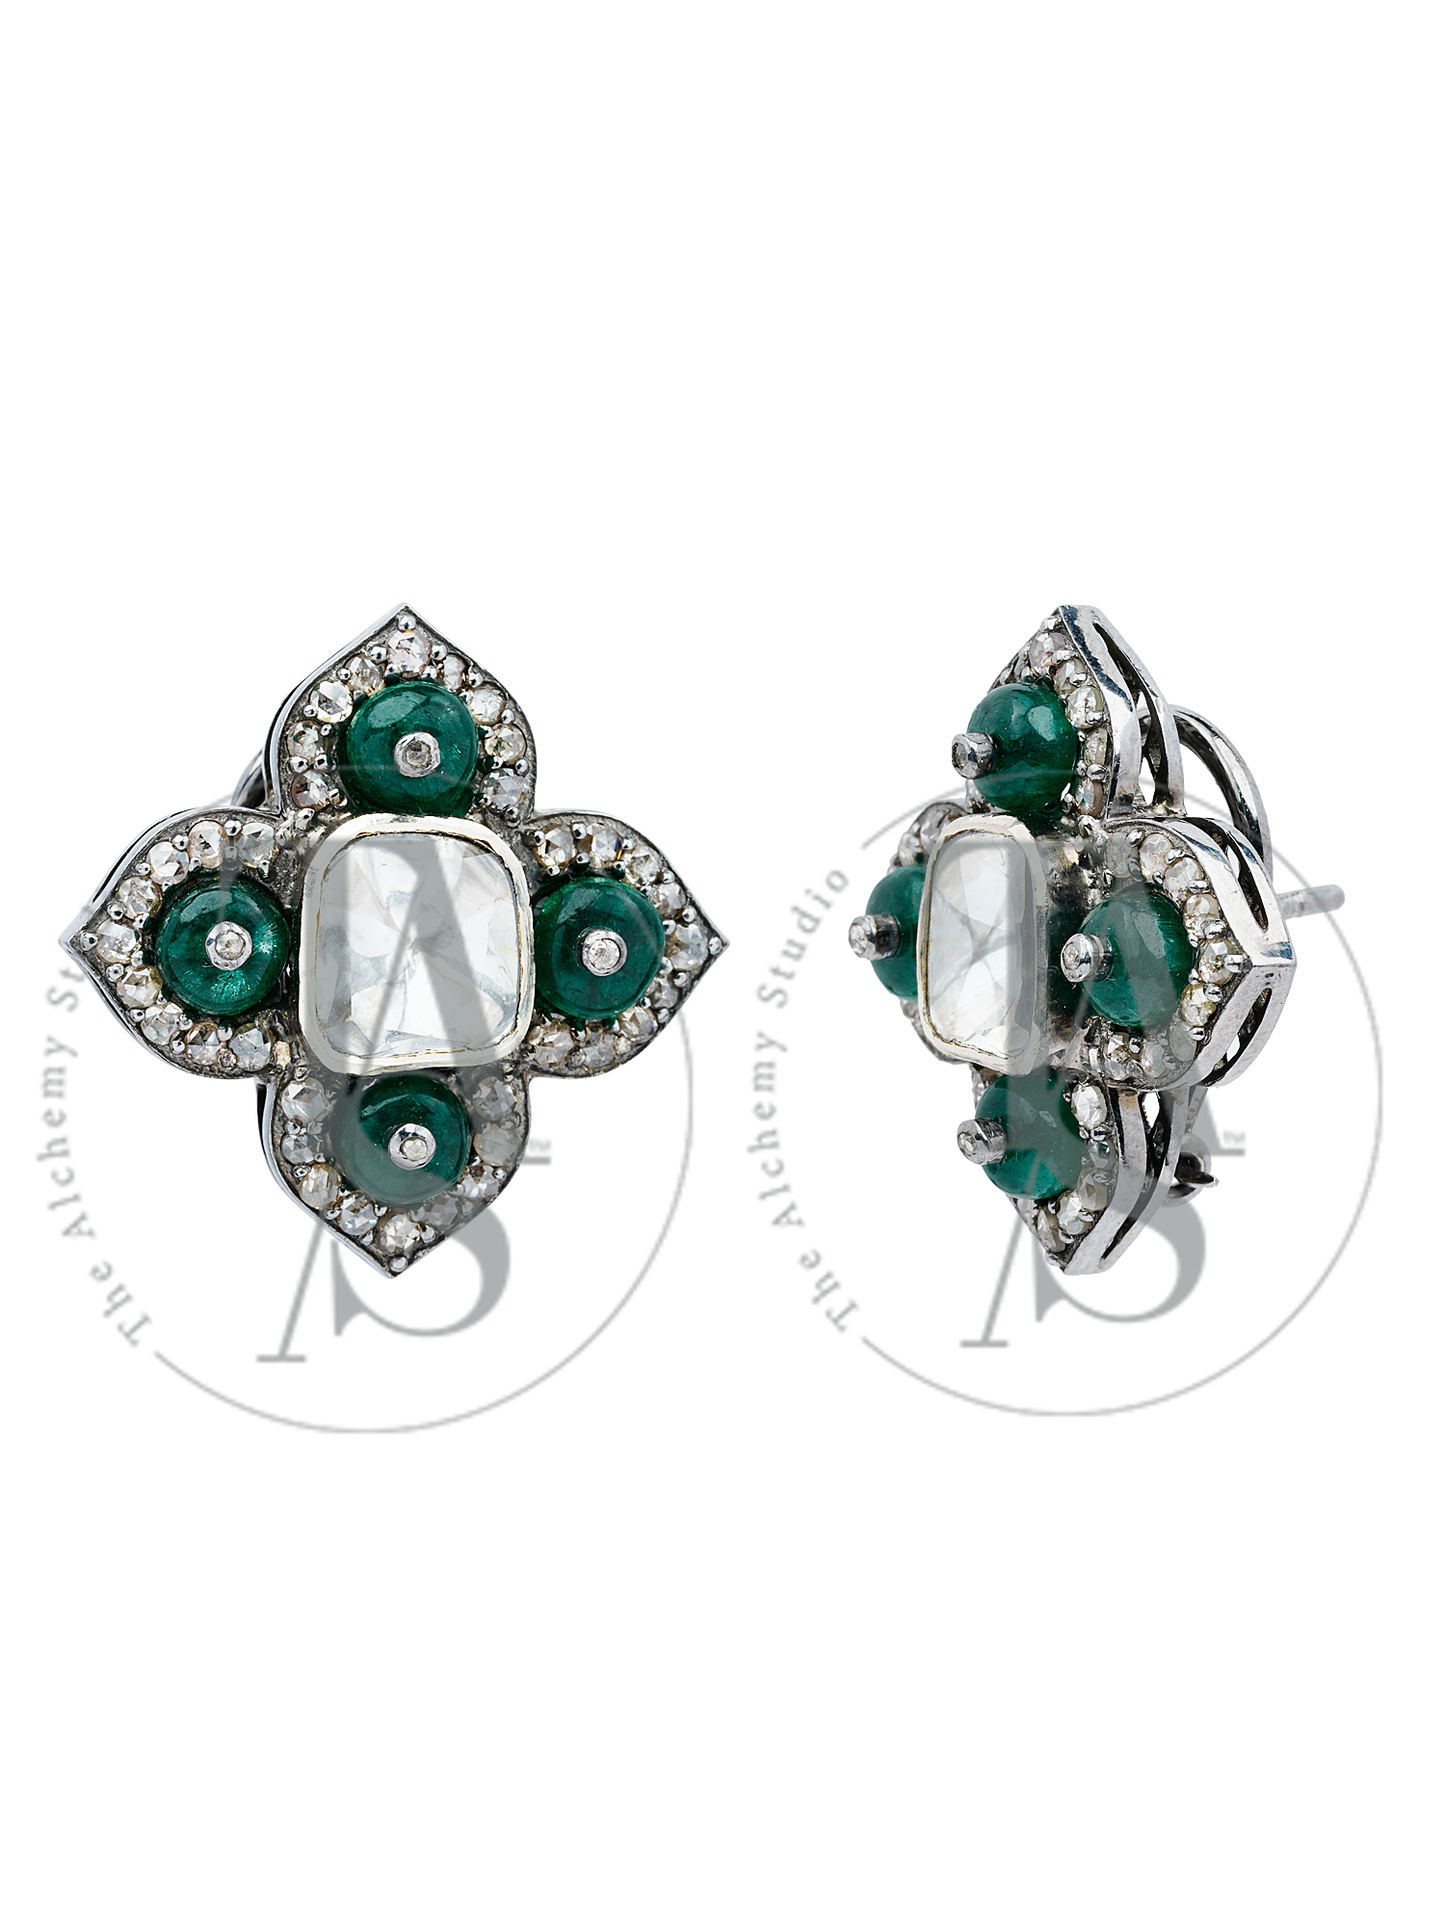 Four Petal Emerald Uncut DiamoFour Petal Emerald Uncut Diamond Earringsnd Earrings